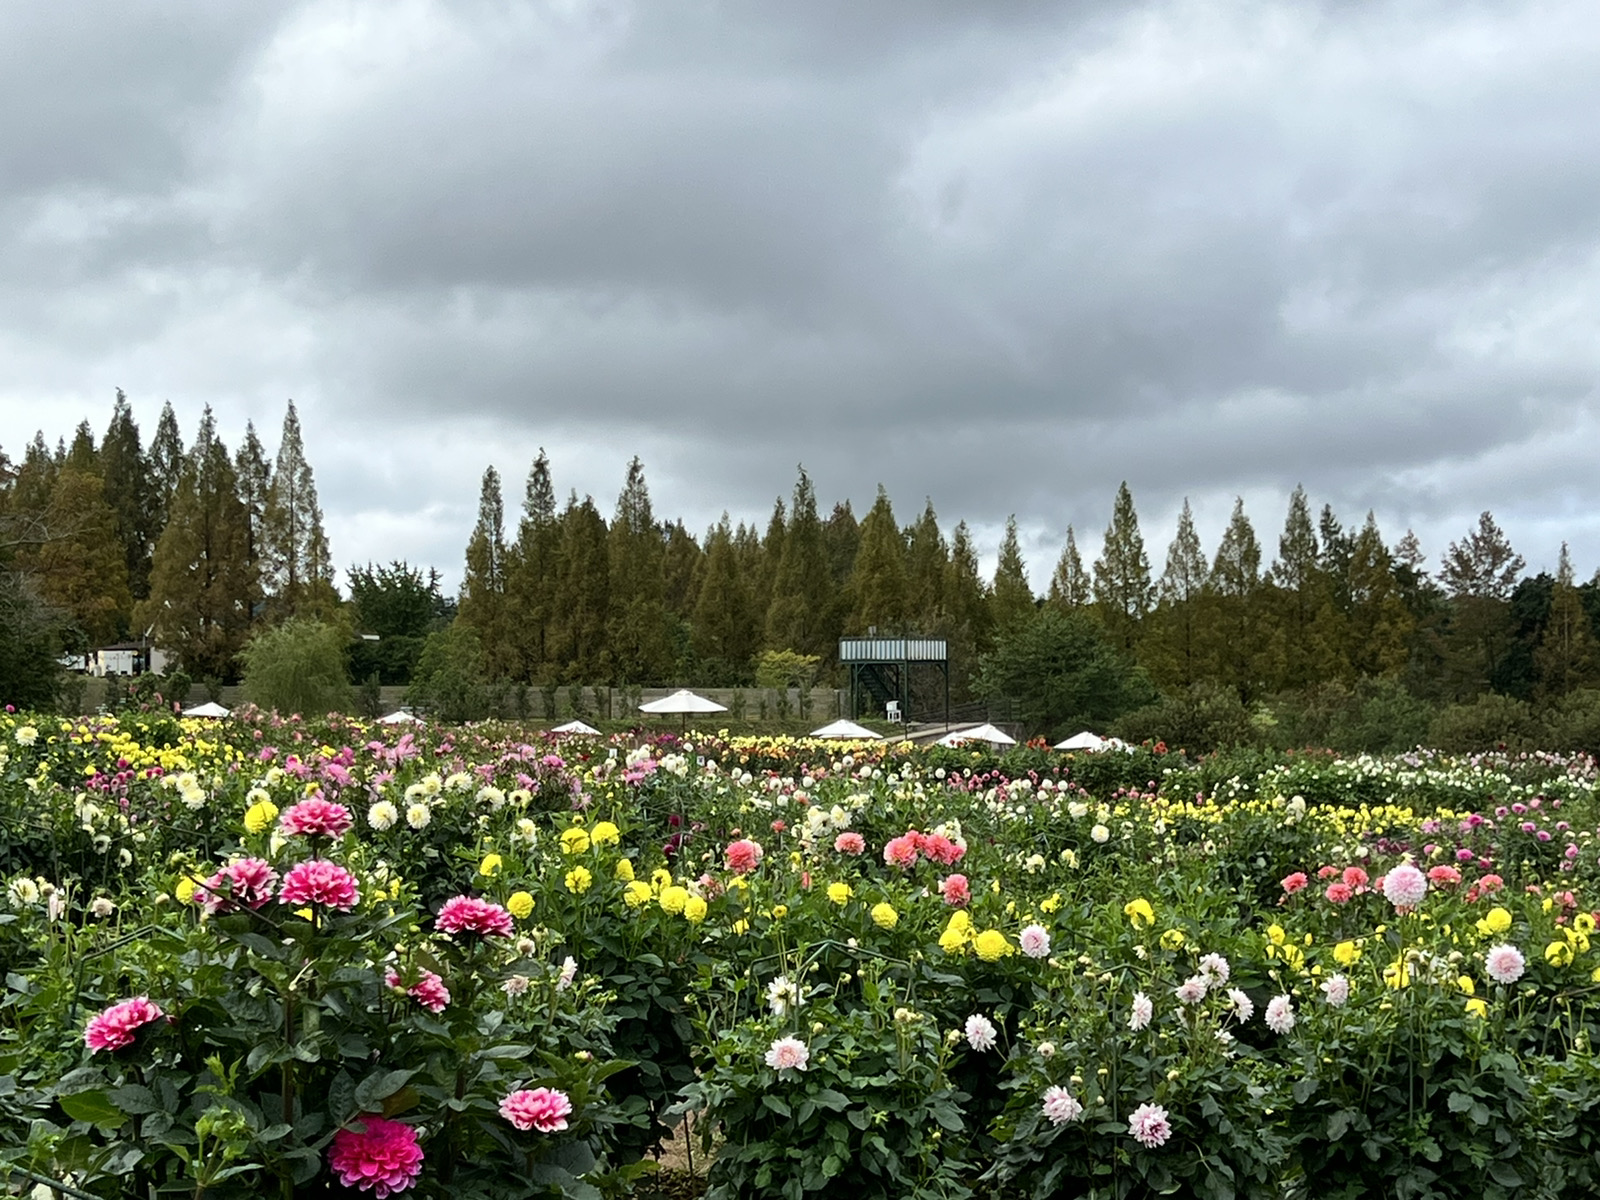 【Park open】Dahlia 【The best season for viewing flowers】Garden Mom 【The best season for viewing flowers】